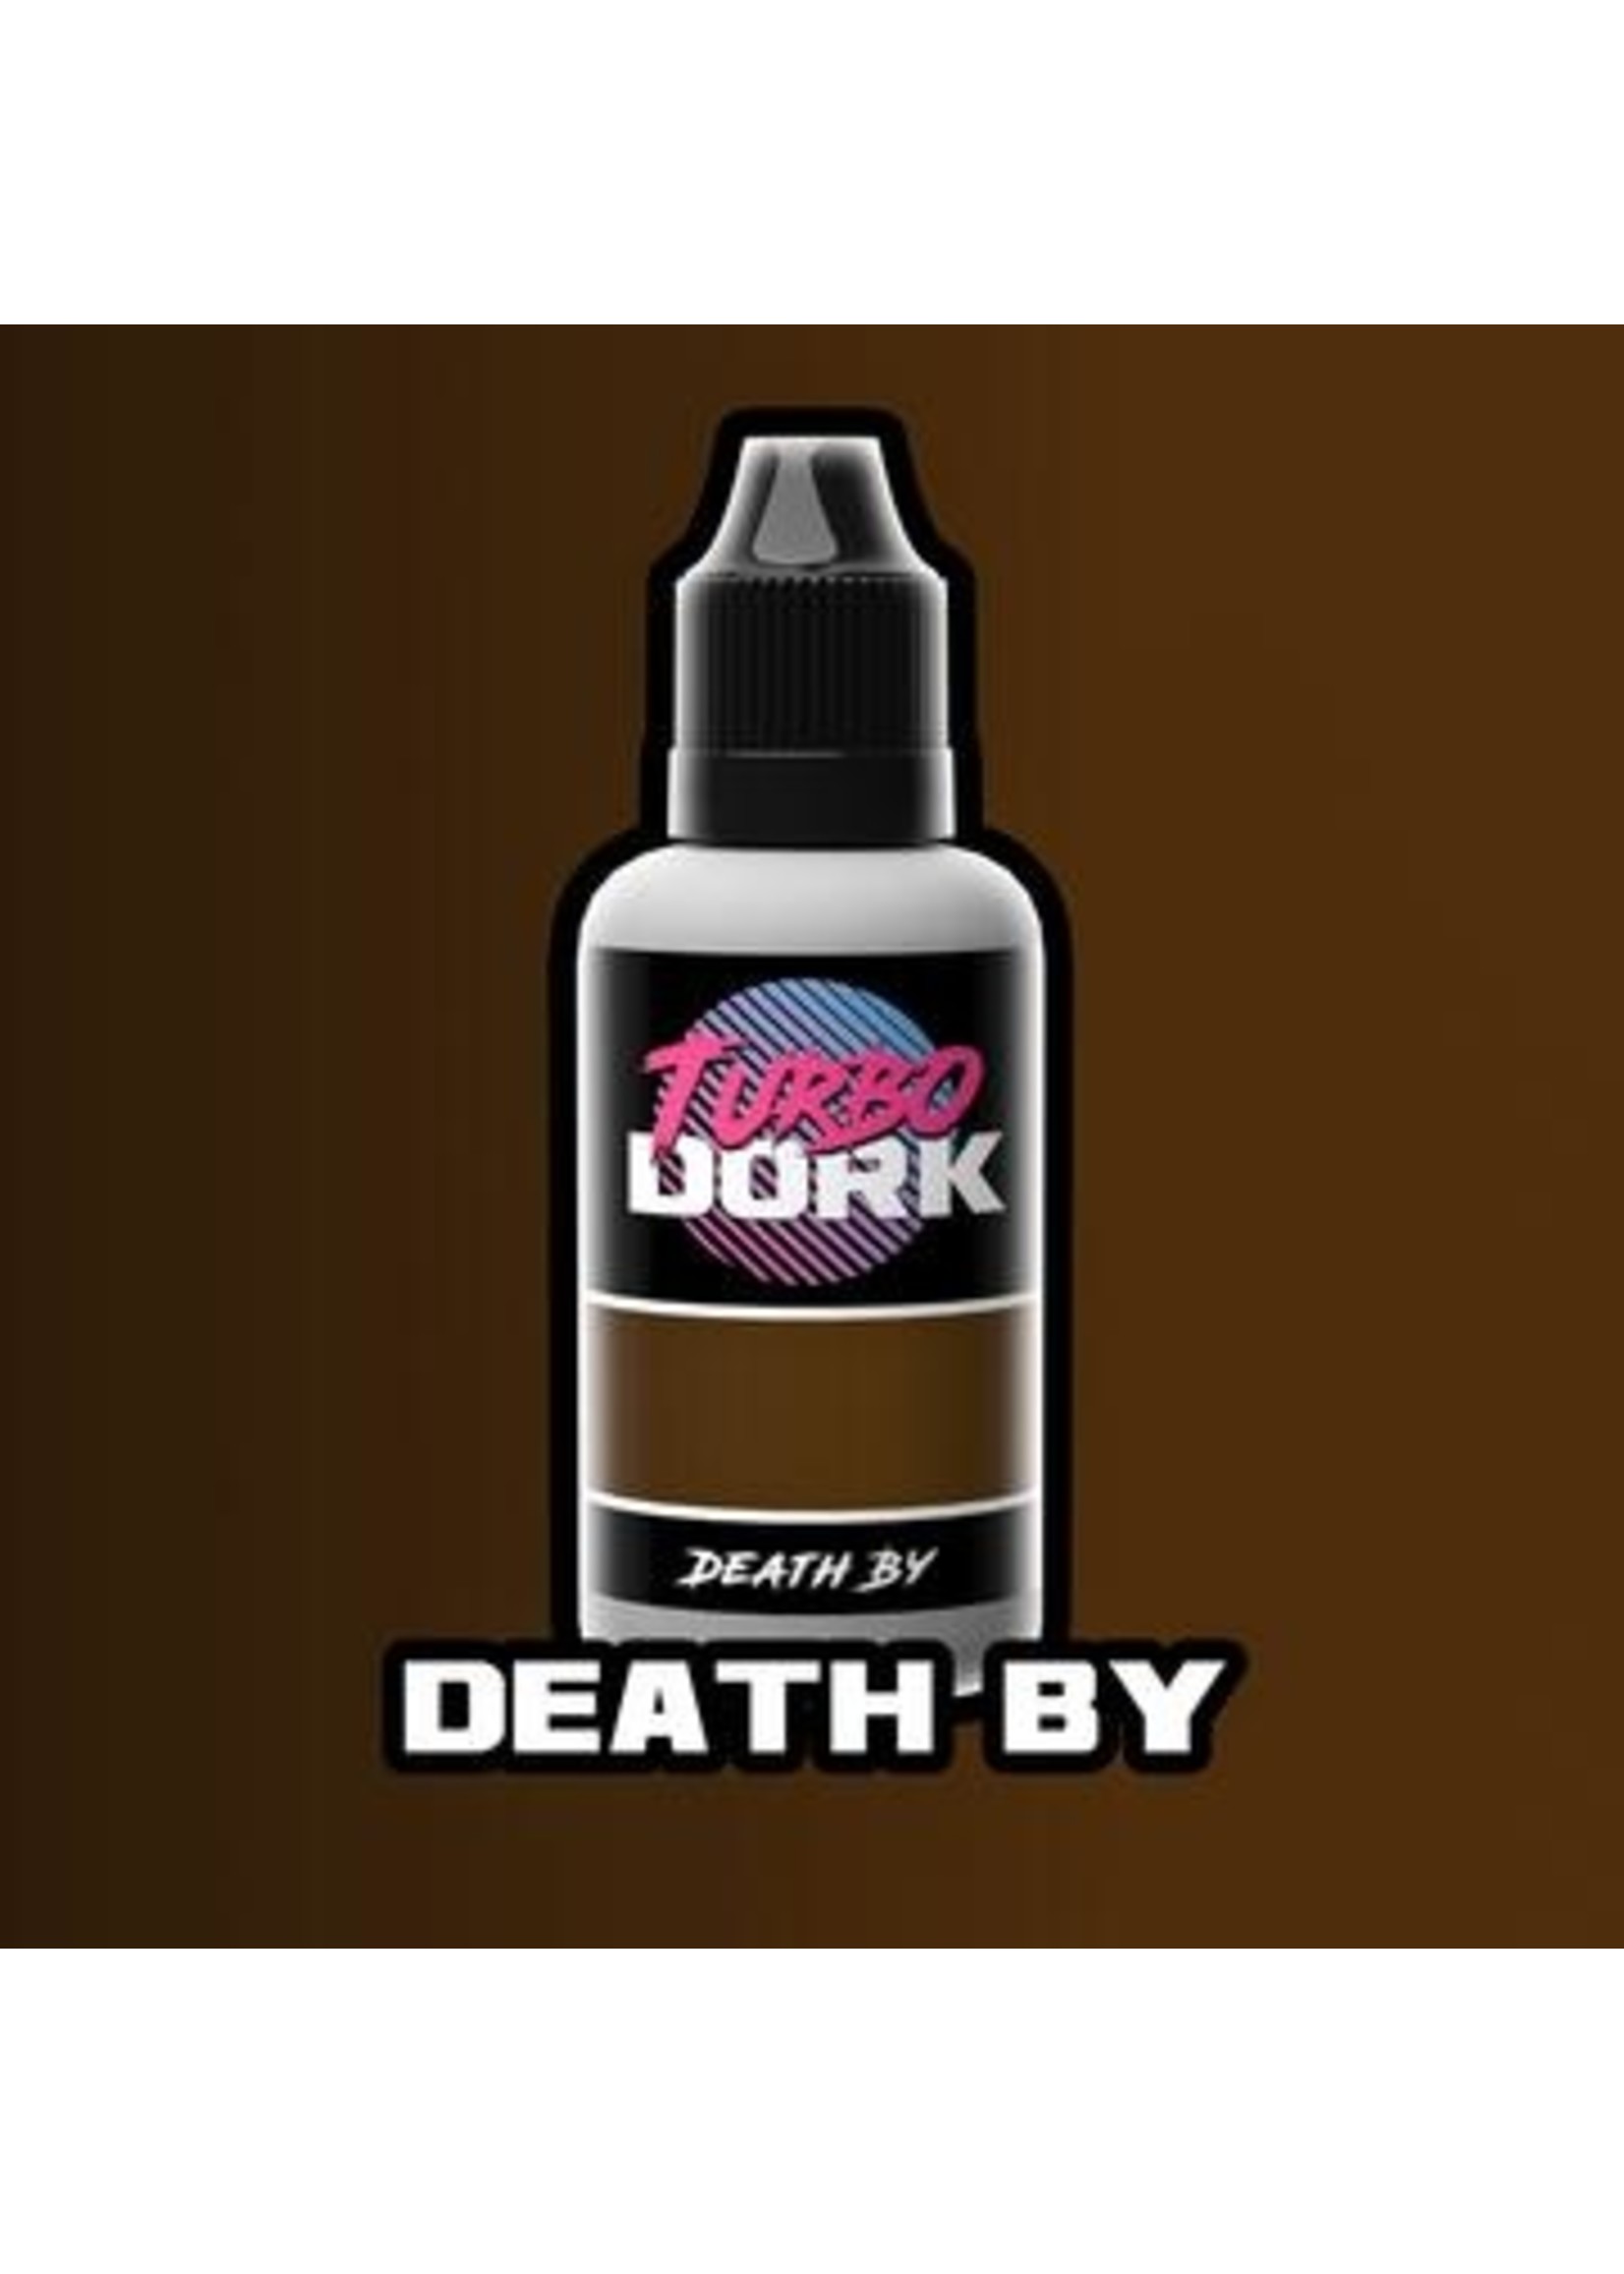 Turbo Dork Death By Metallic Acrylic Paint - 20ml Bottle